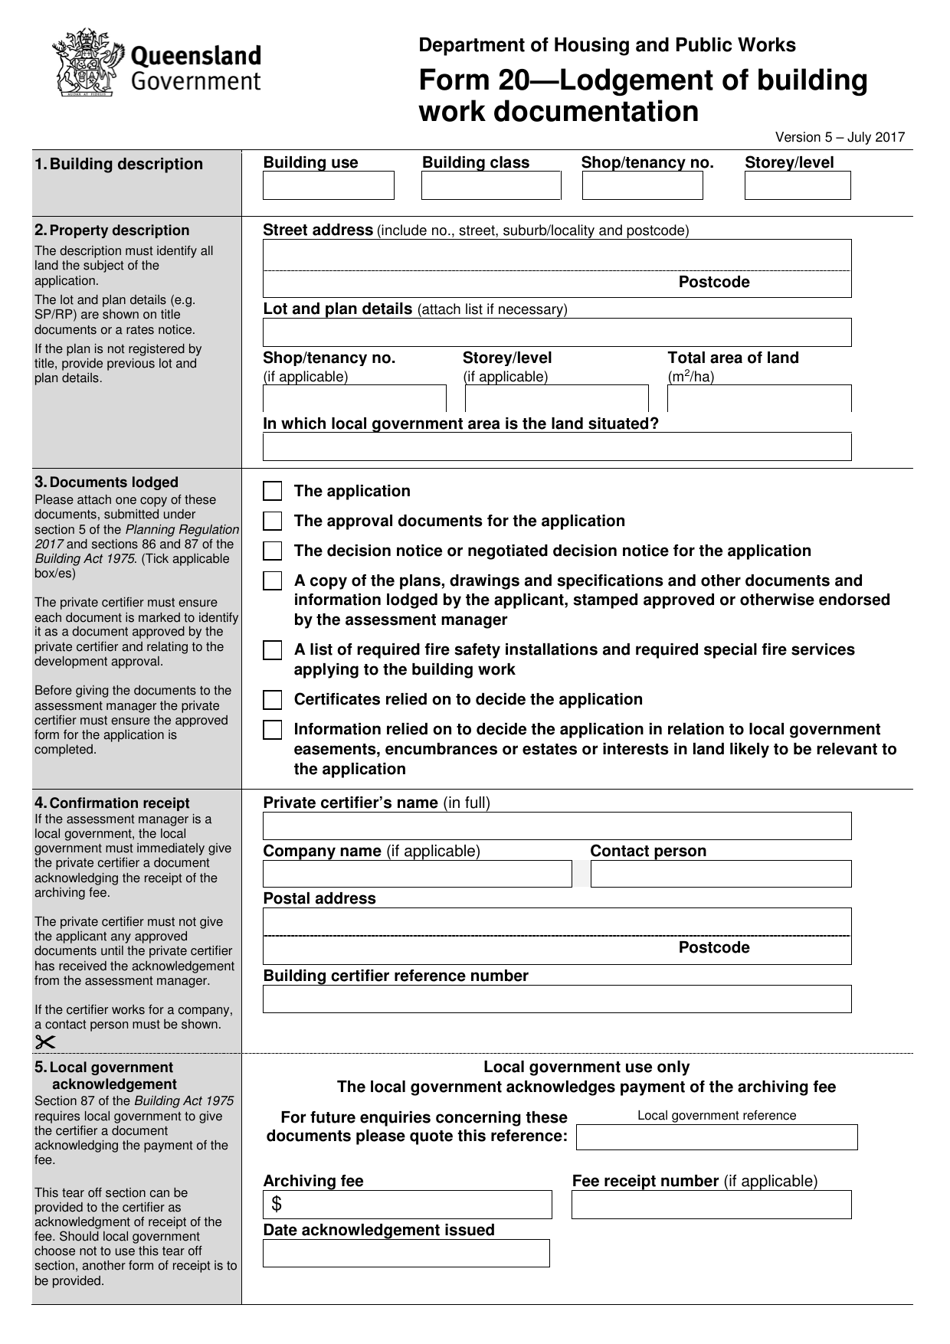 Form 20 Lodgement of Building Work Documentation - Queensland, Australia, Page 1